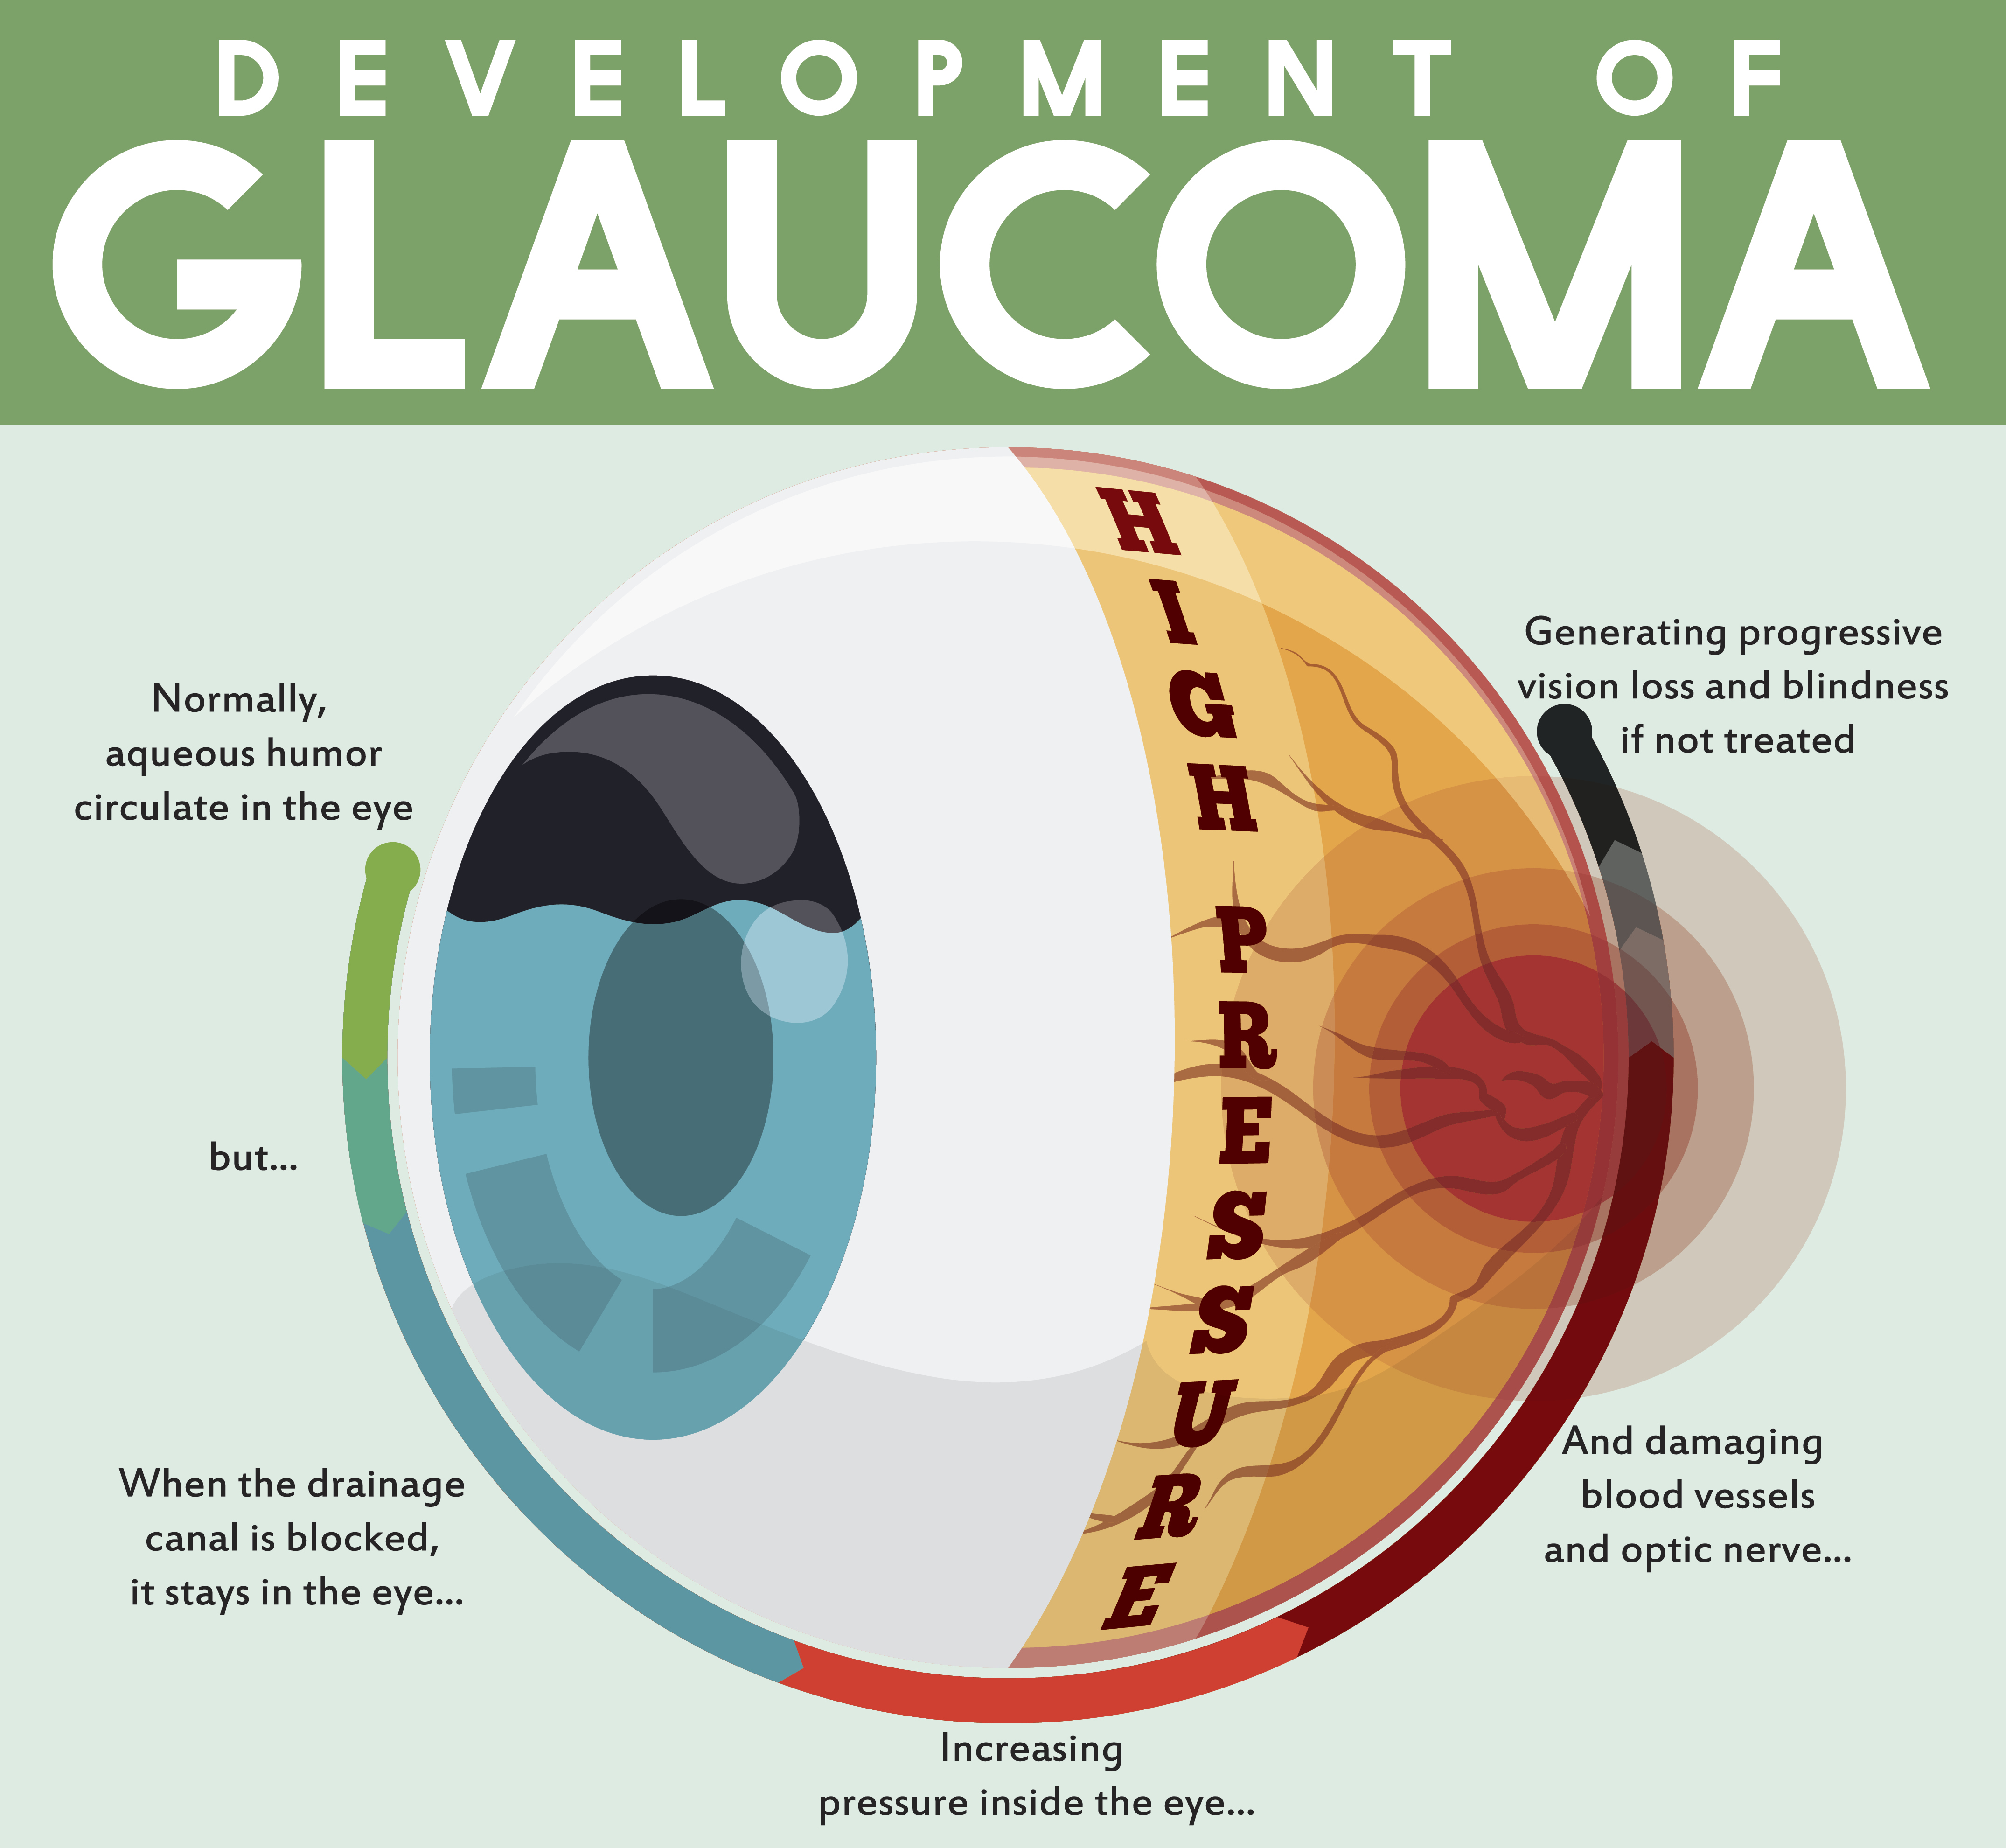 Professional diploma in glaucoma